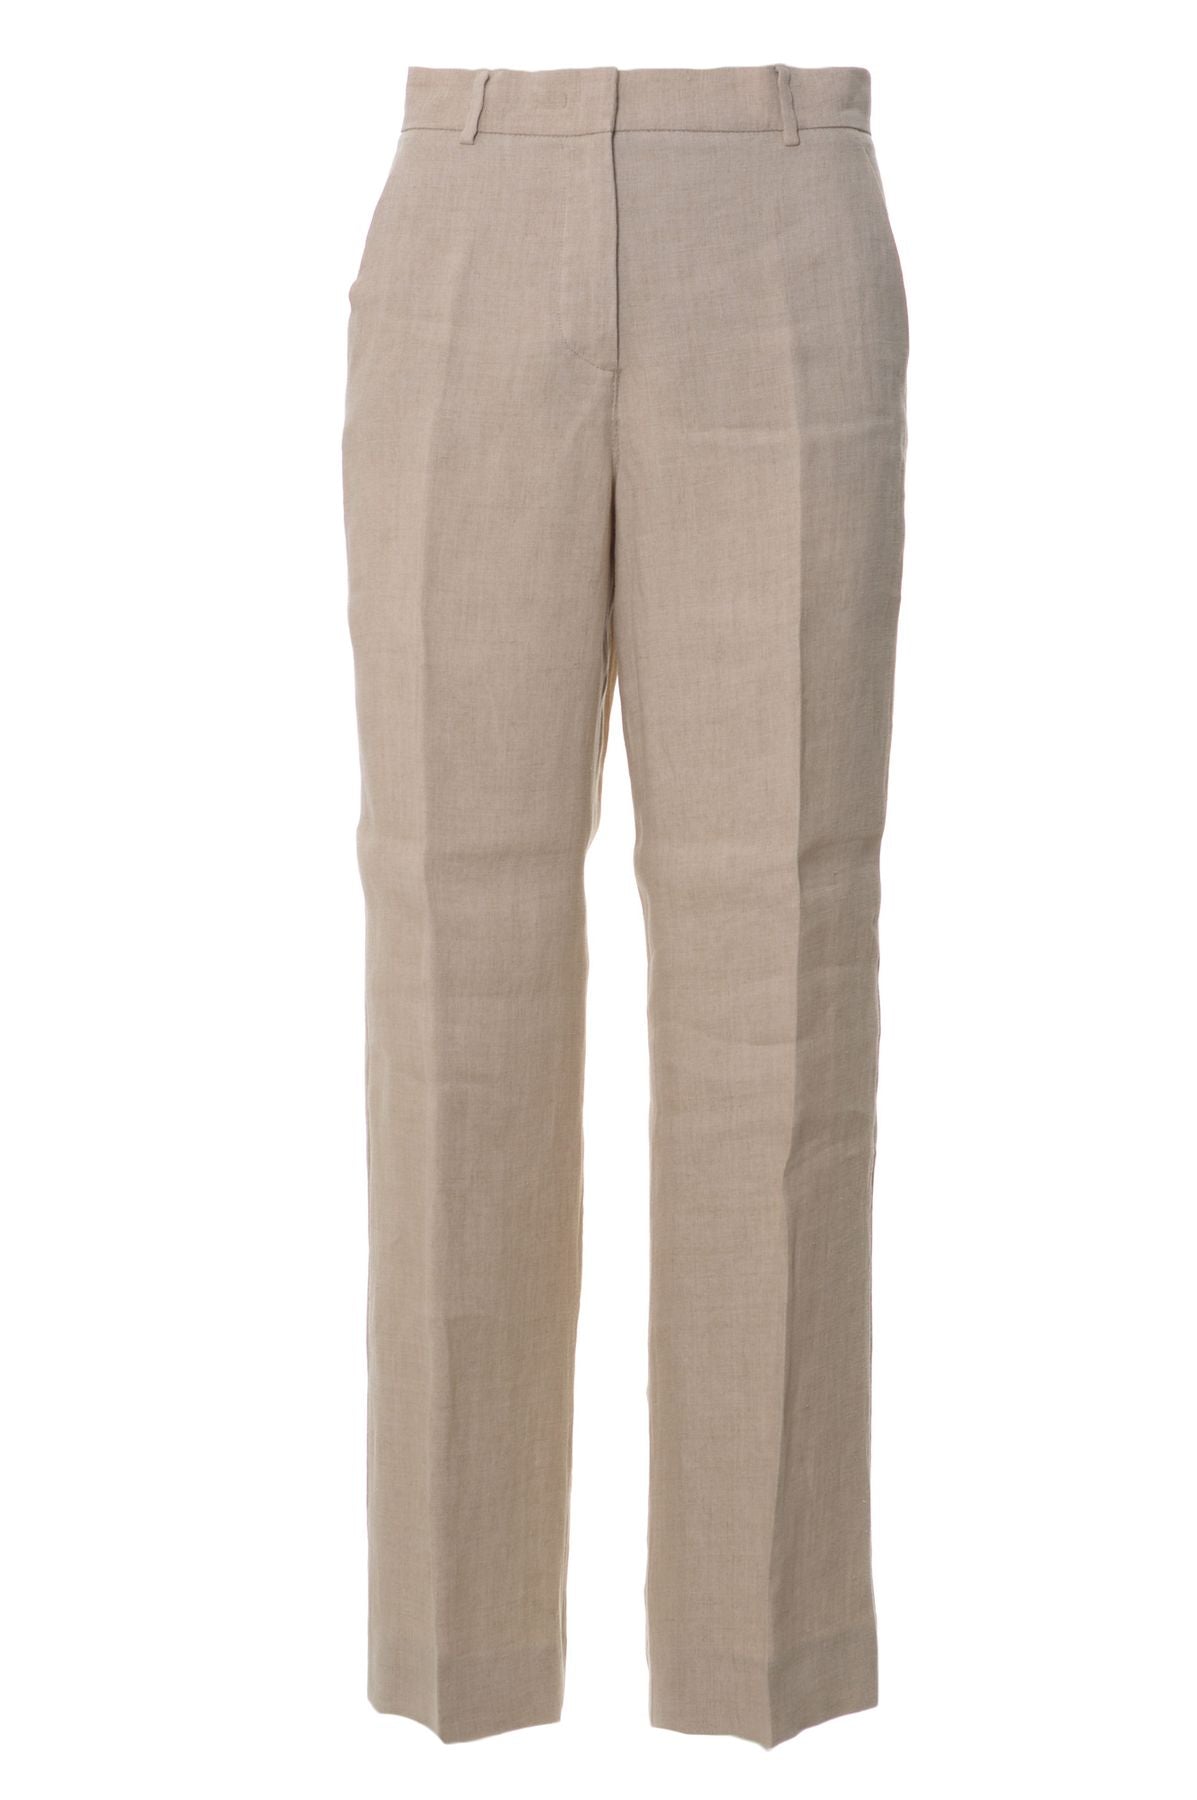 MaxMara Spring/Summer Linen Trousers